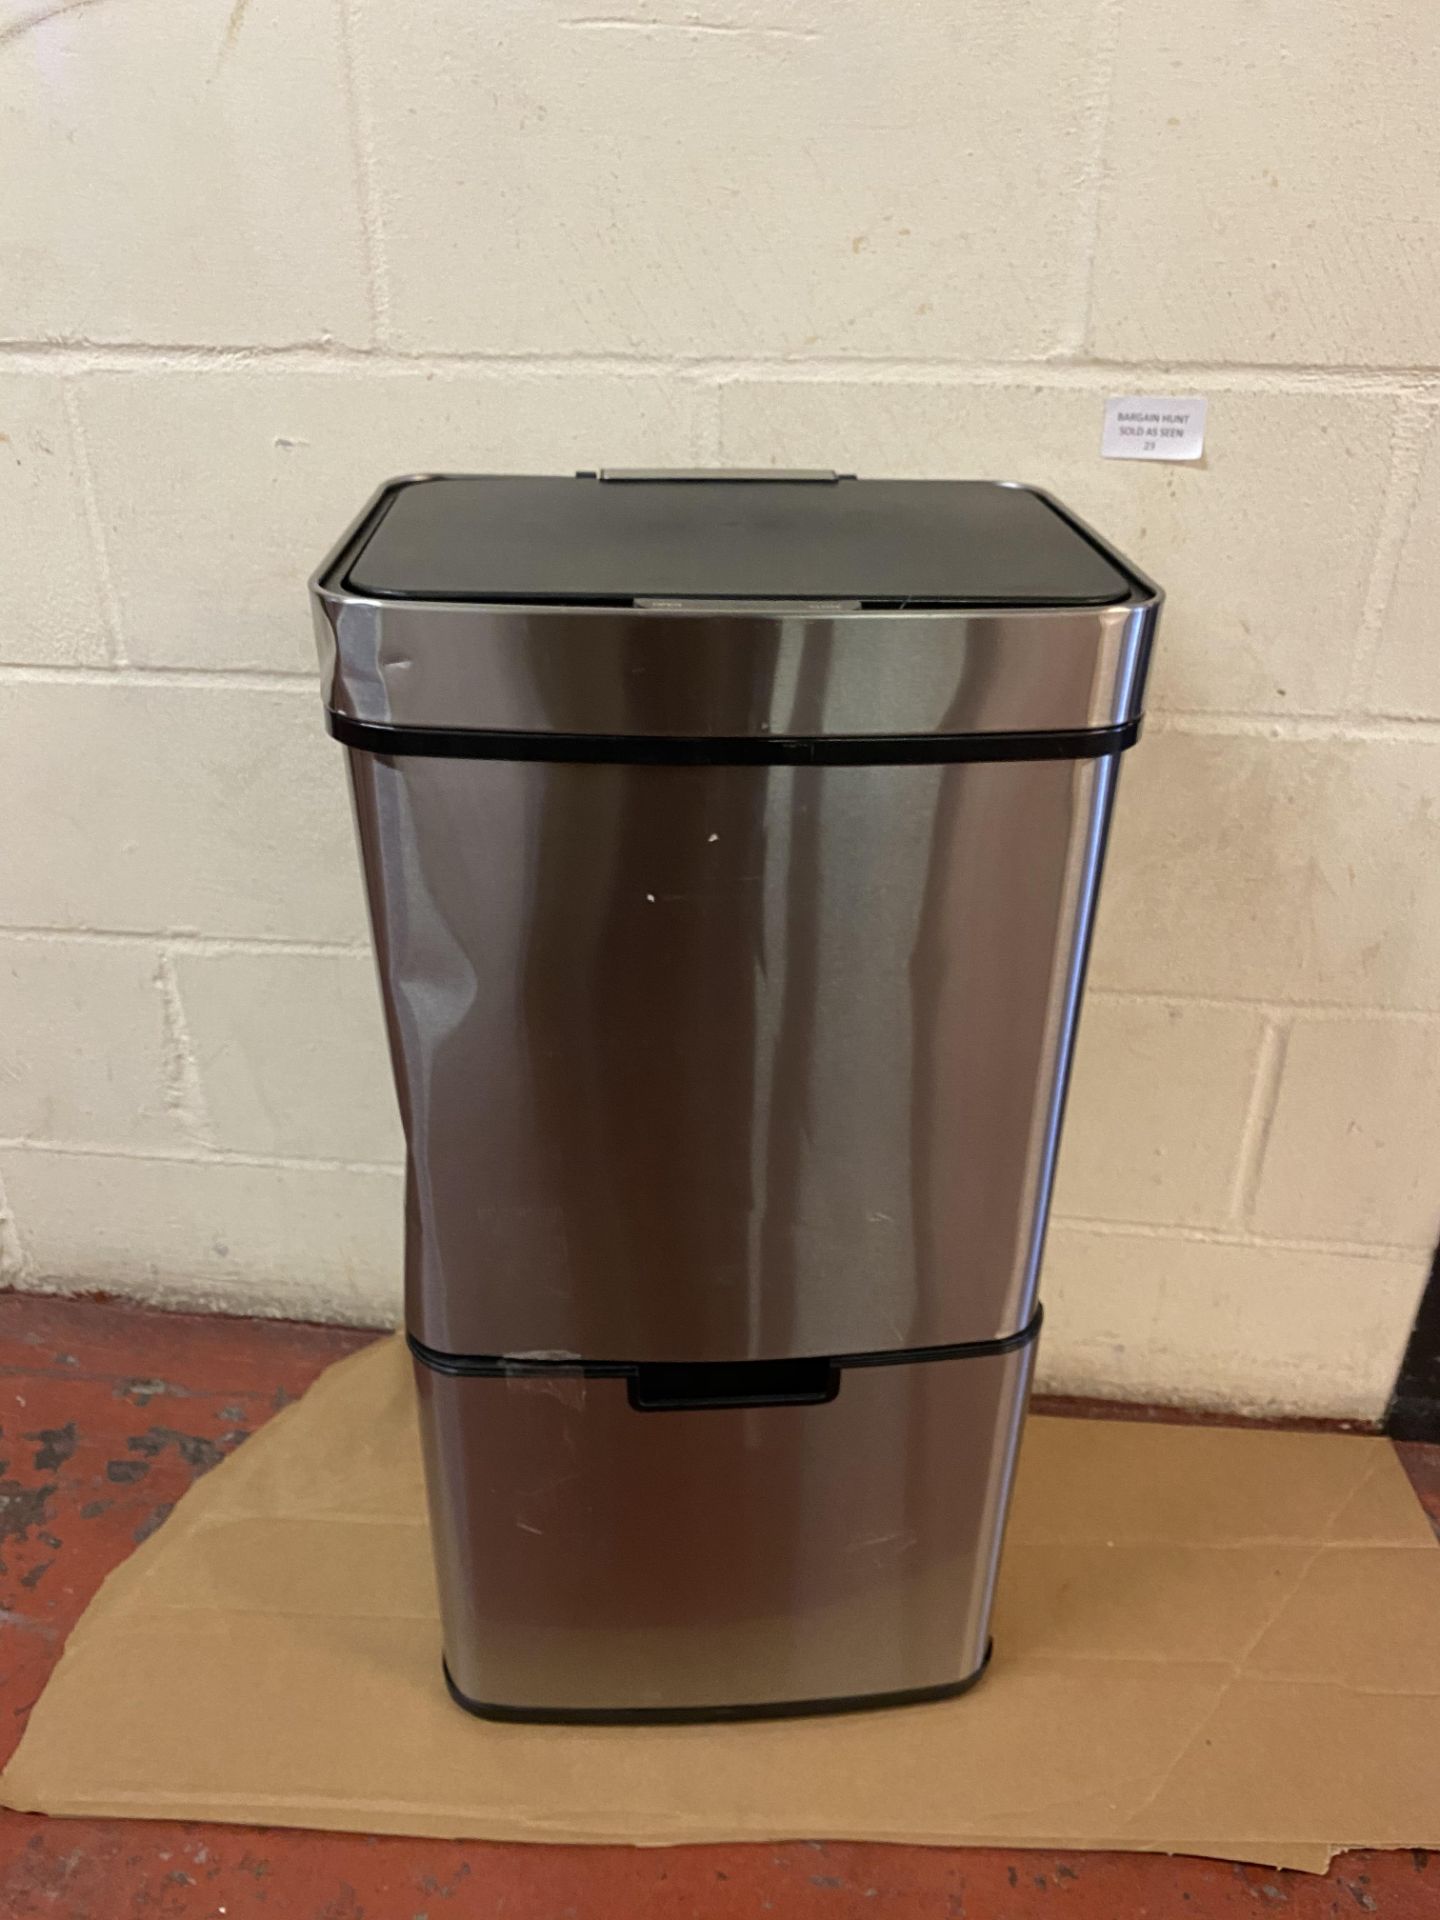 Morphy Richards Kitchen Bin, Pro Recycling Sensor Waste Bin (dented, see image) RRP £117.99